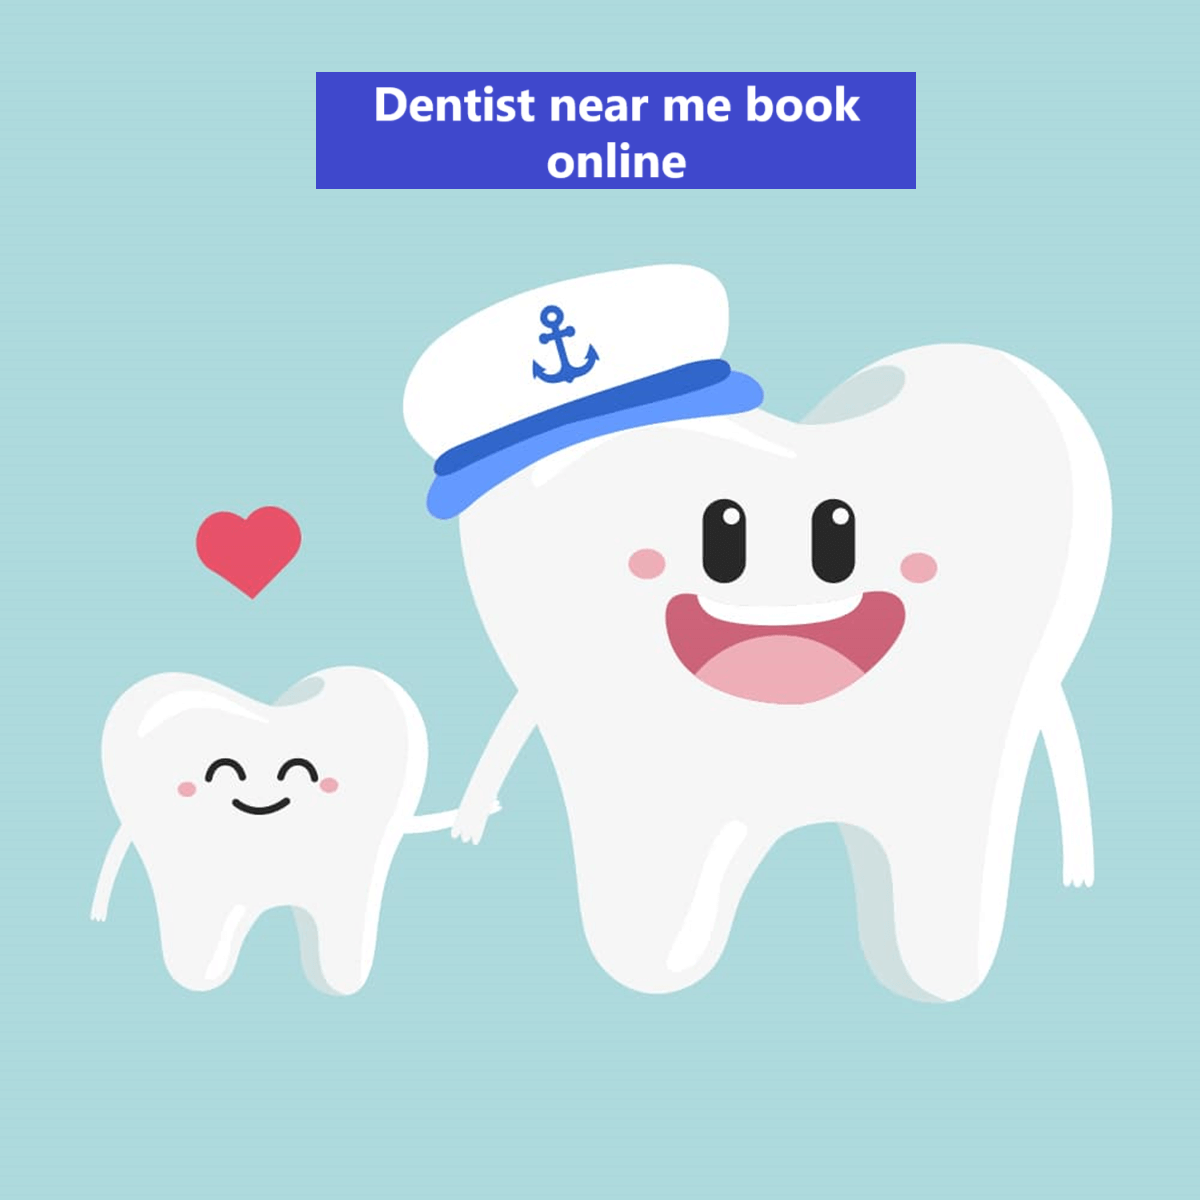 Dentist near me book online